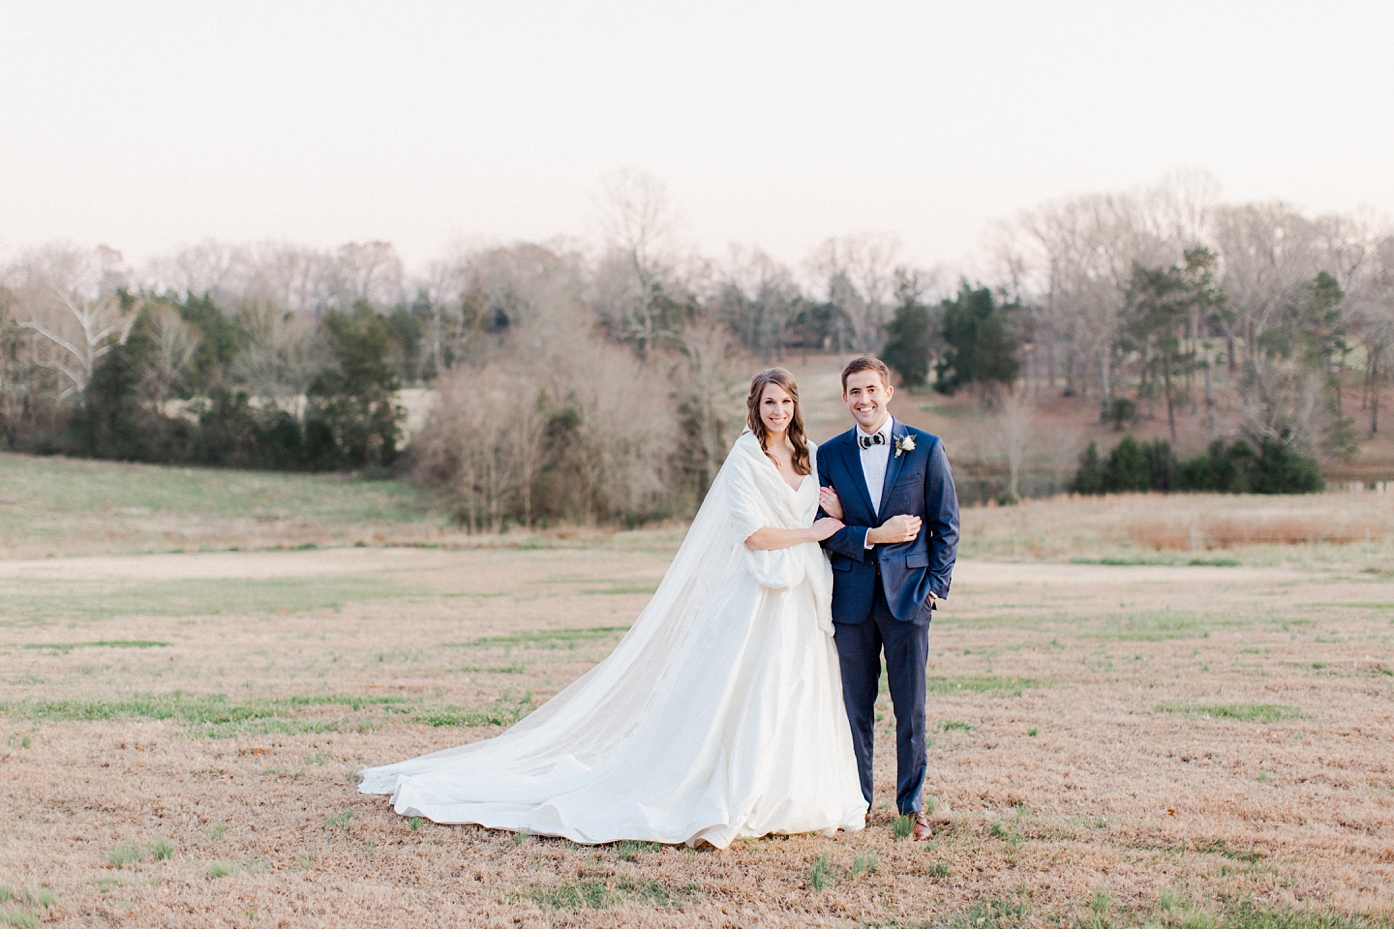 Greensboro NC Winter Wedding at Summerfield Farms by Alisandra Photography